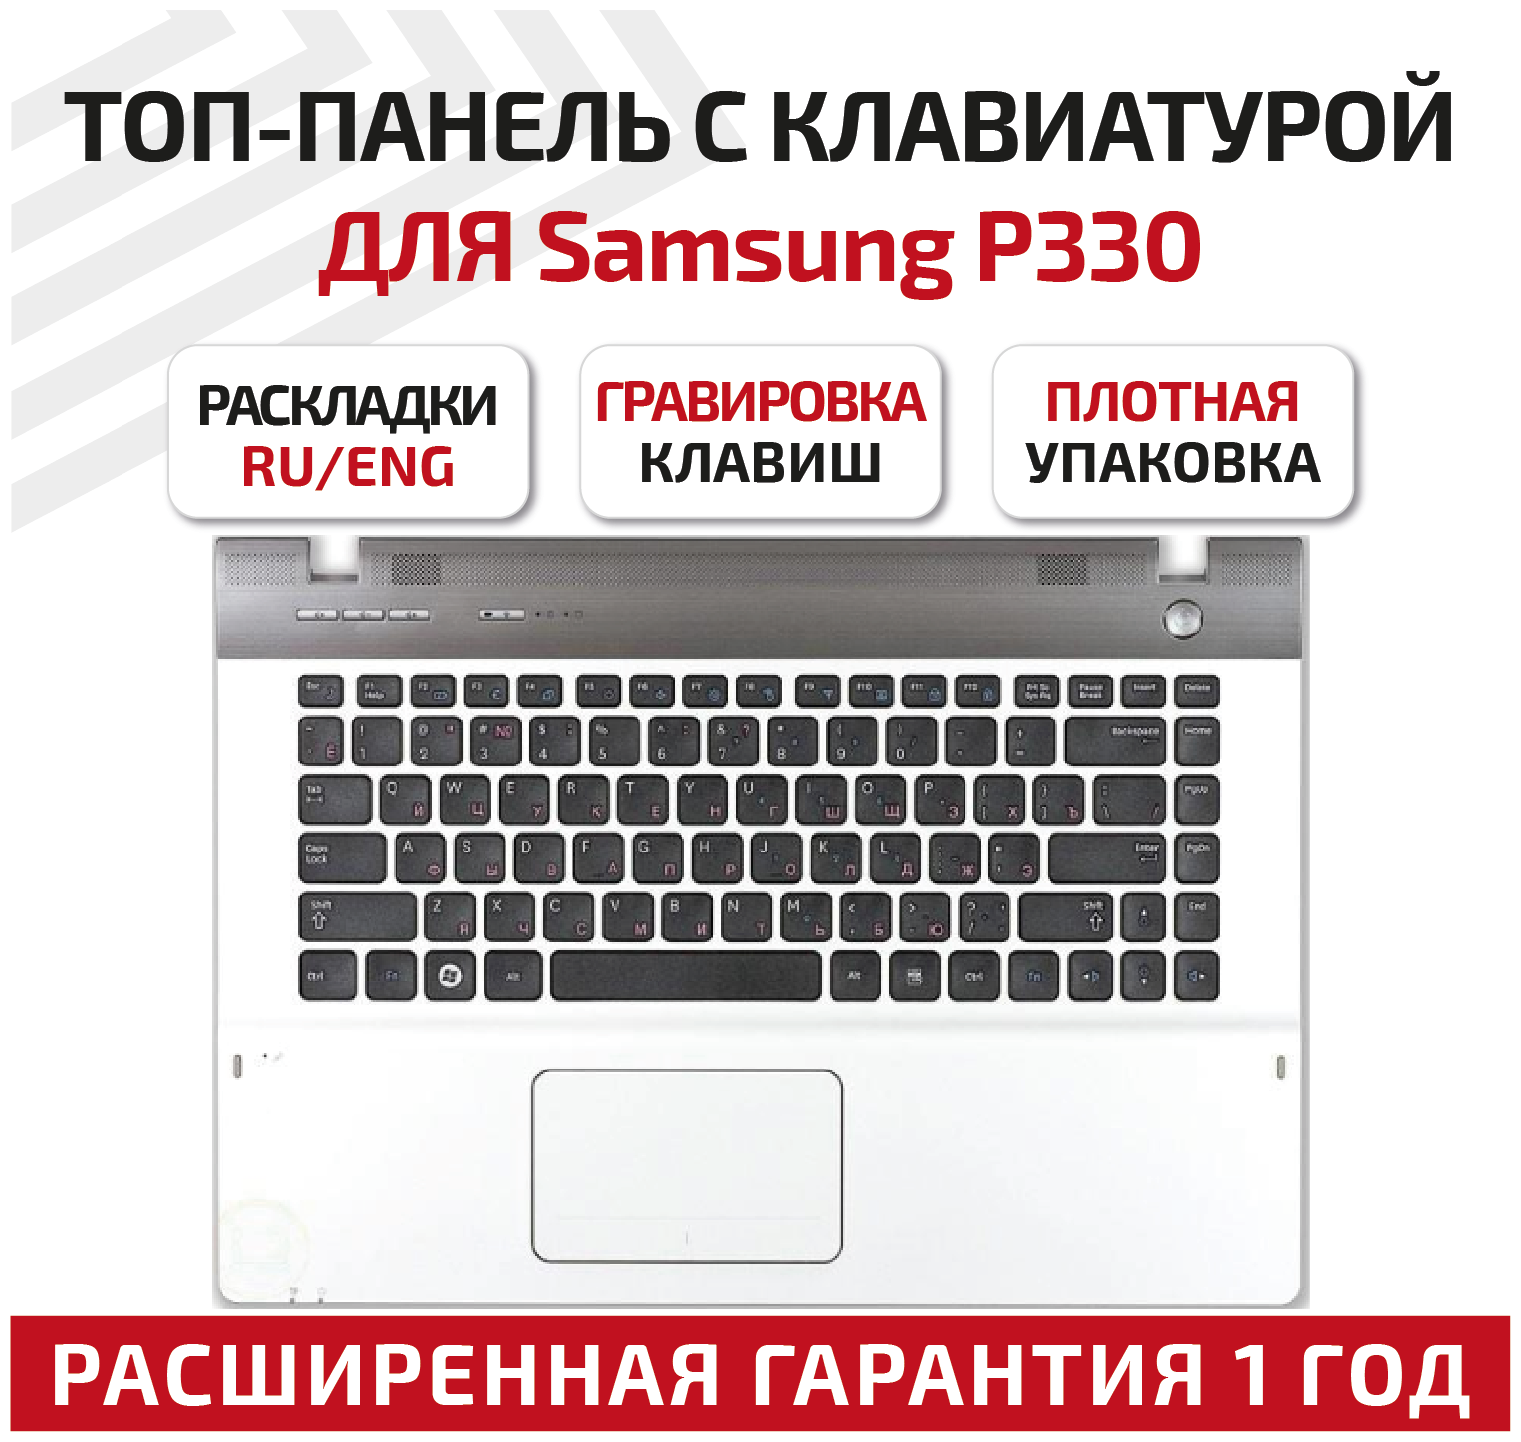 Клавиатура (keyboard) BA59-02792C для ноутбука Samsung P330, Q330, Q430, QX310, QX410, QX411, QX412, SF310, SF410, X330 Series, серая топ-панель